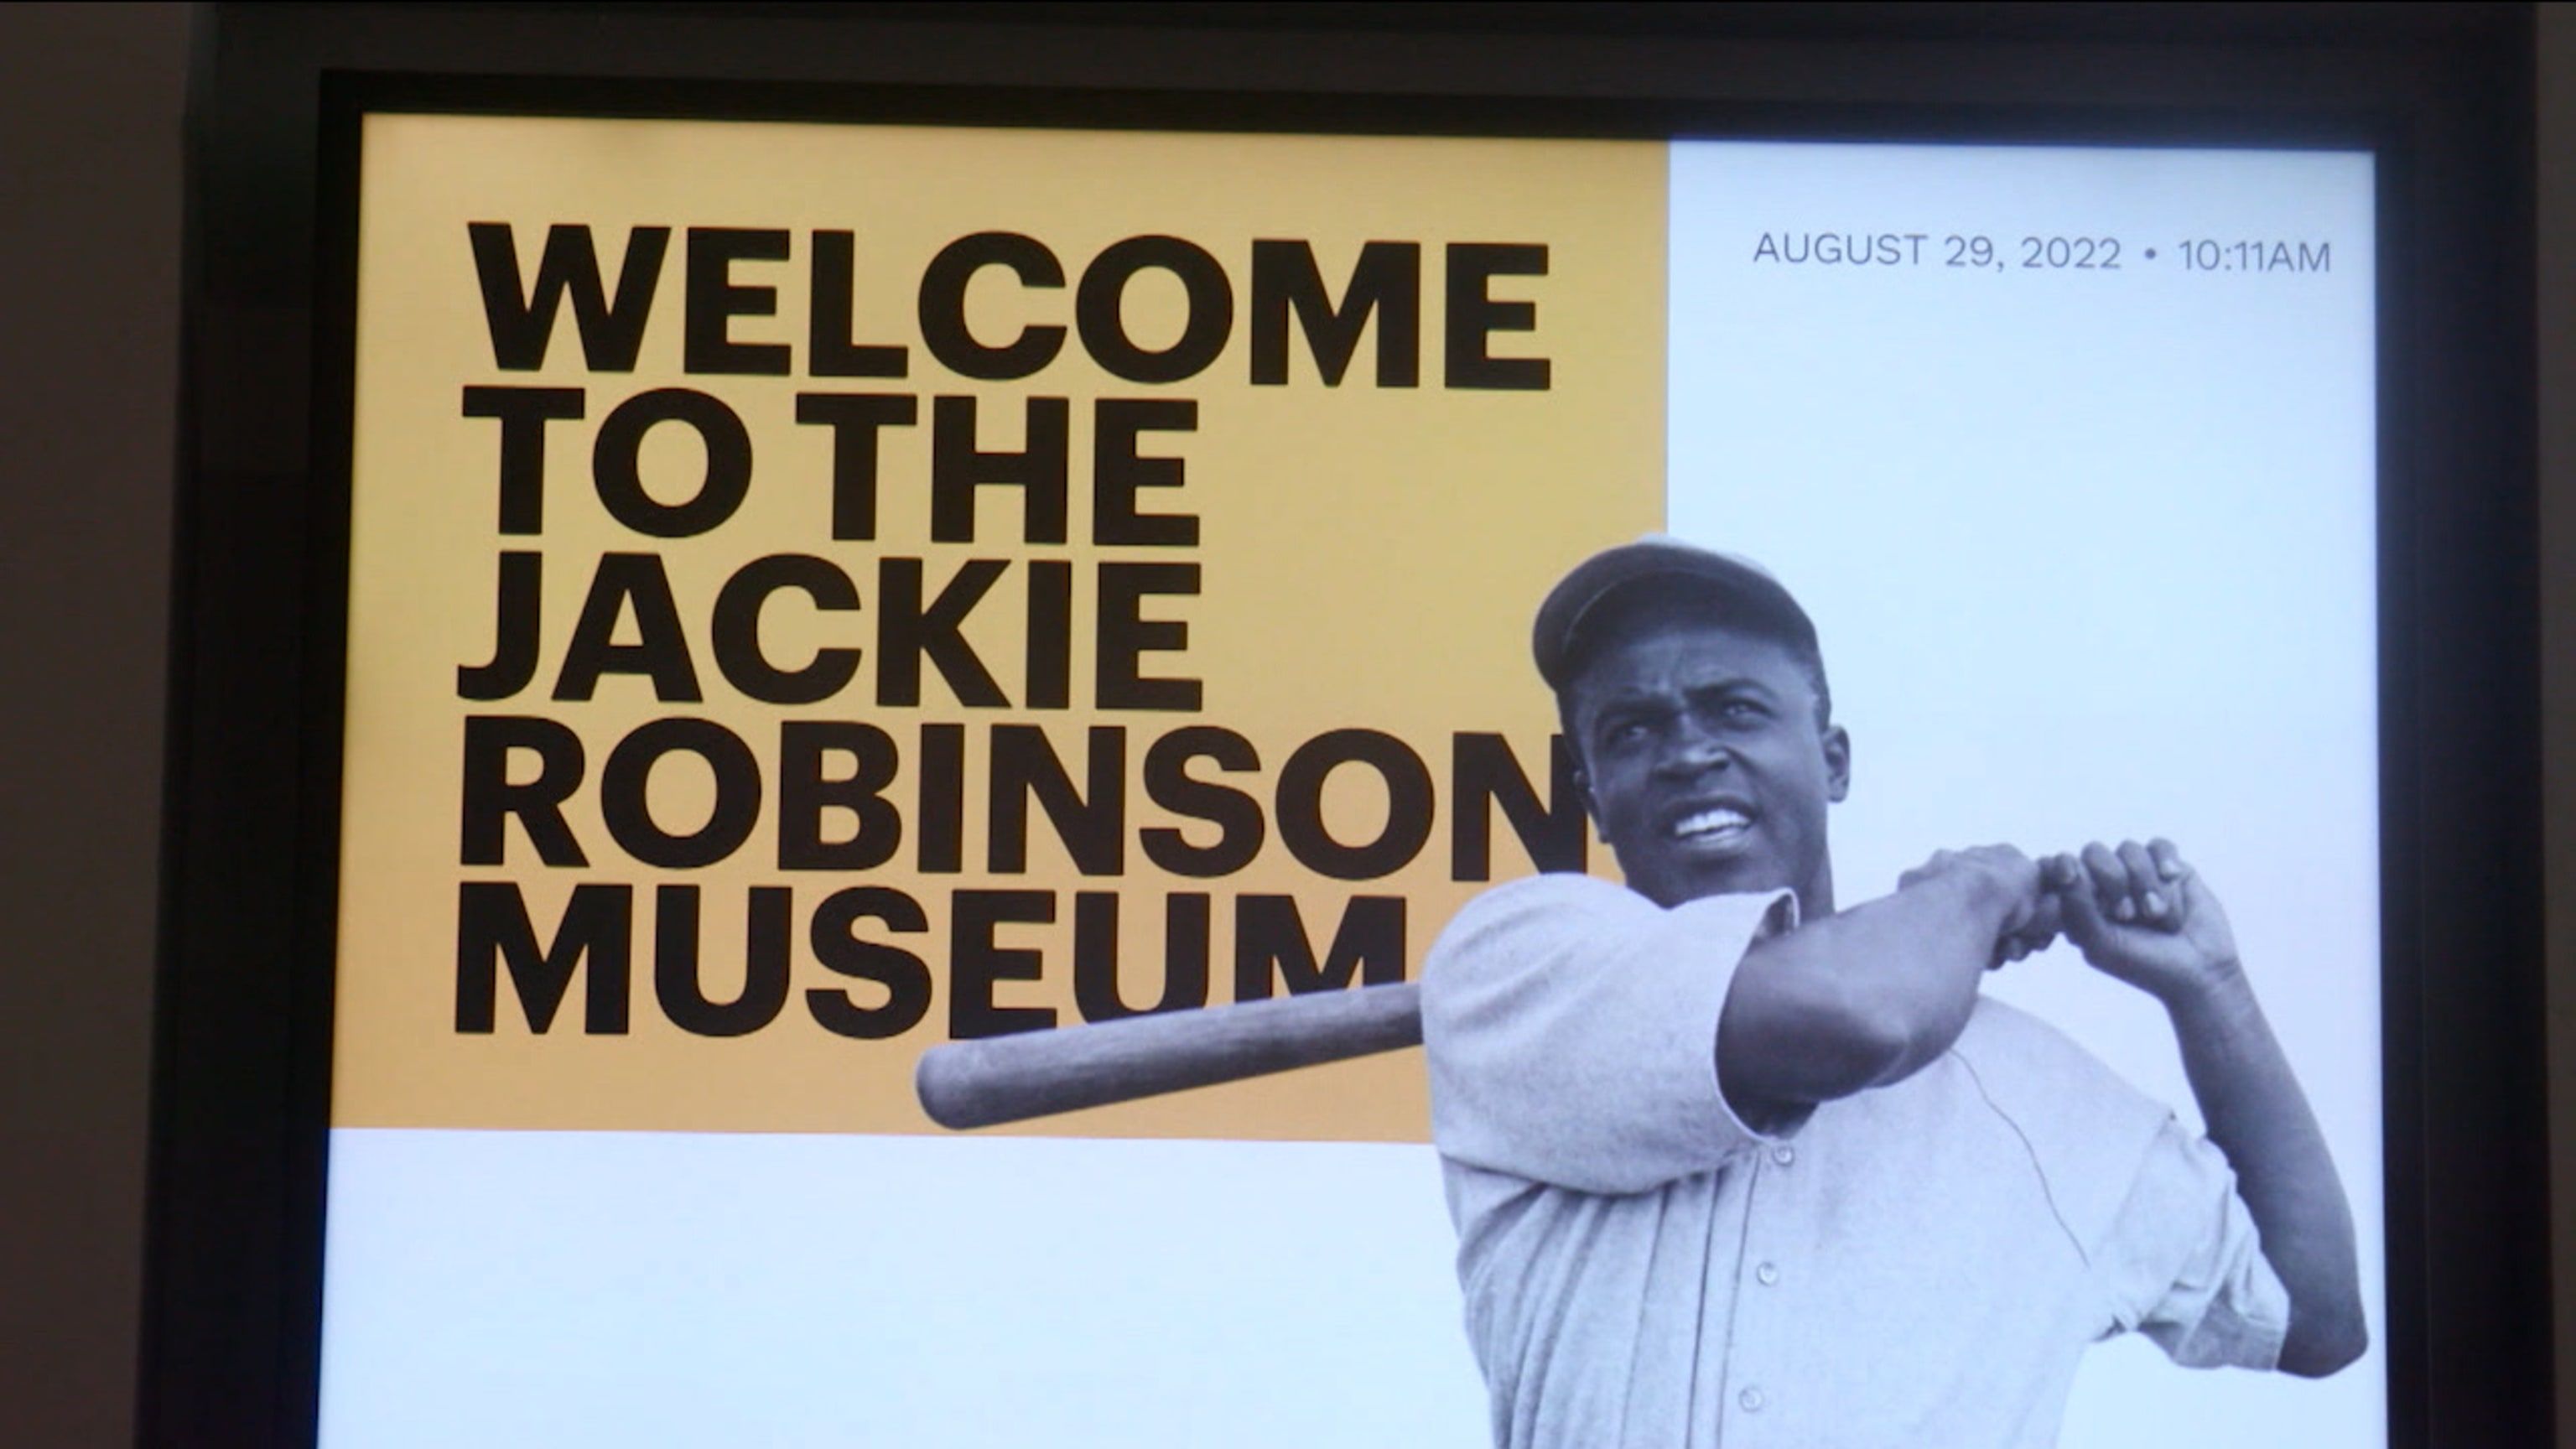 Tomorrow - MLB Celebrates Jackie Robinson Day - Bruins Nation